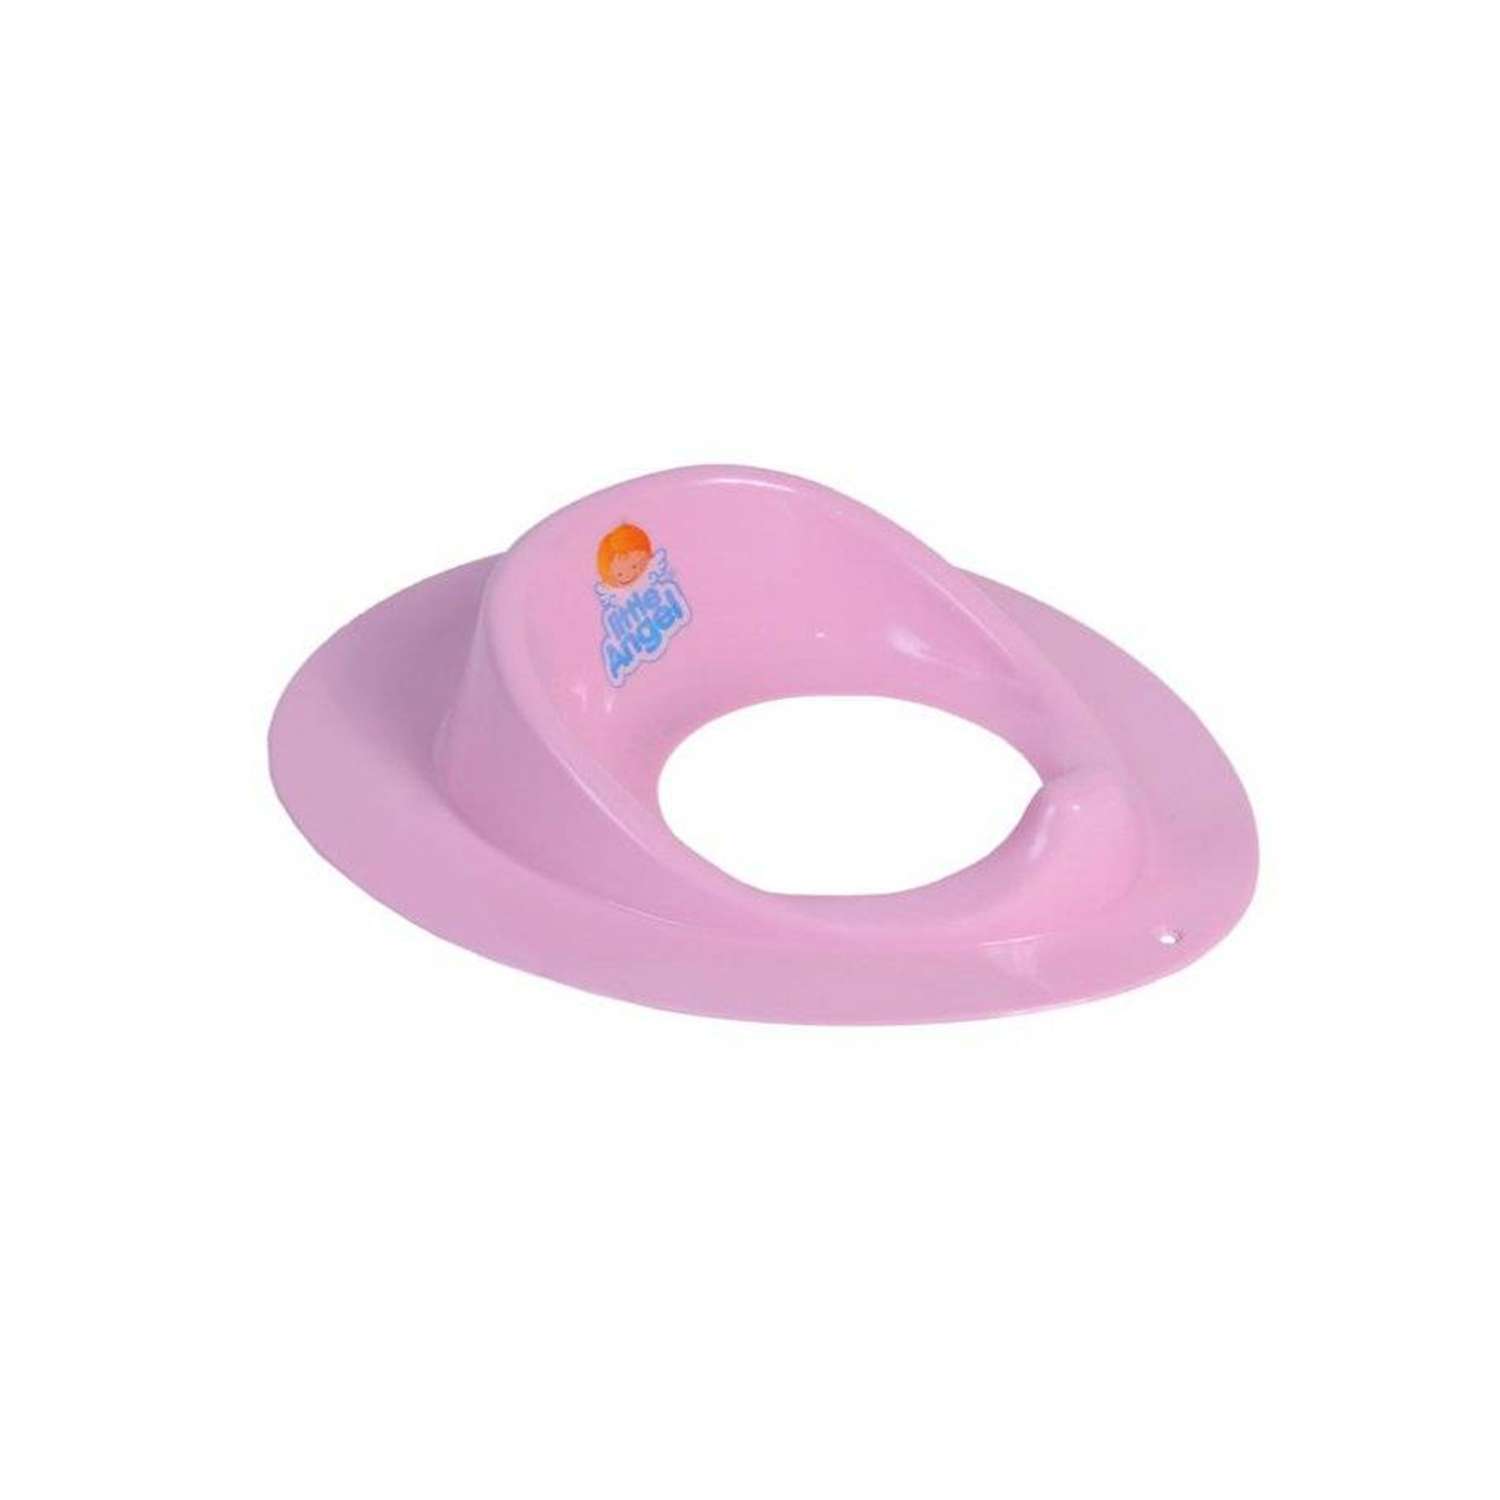 Сидушка PLASTIC REPABLIC baby накладка на унитаз детская защитная розовая - фото 1